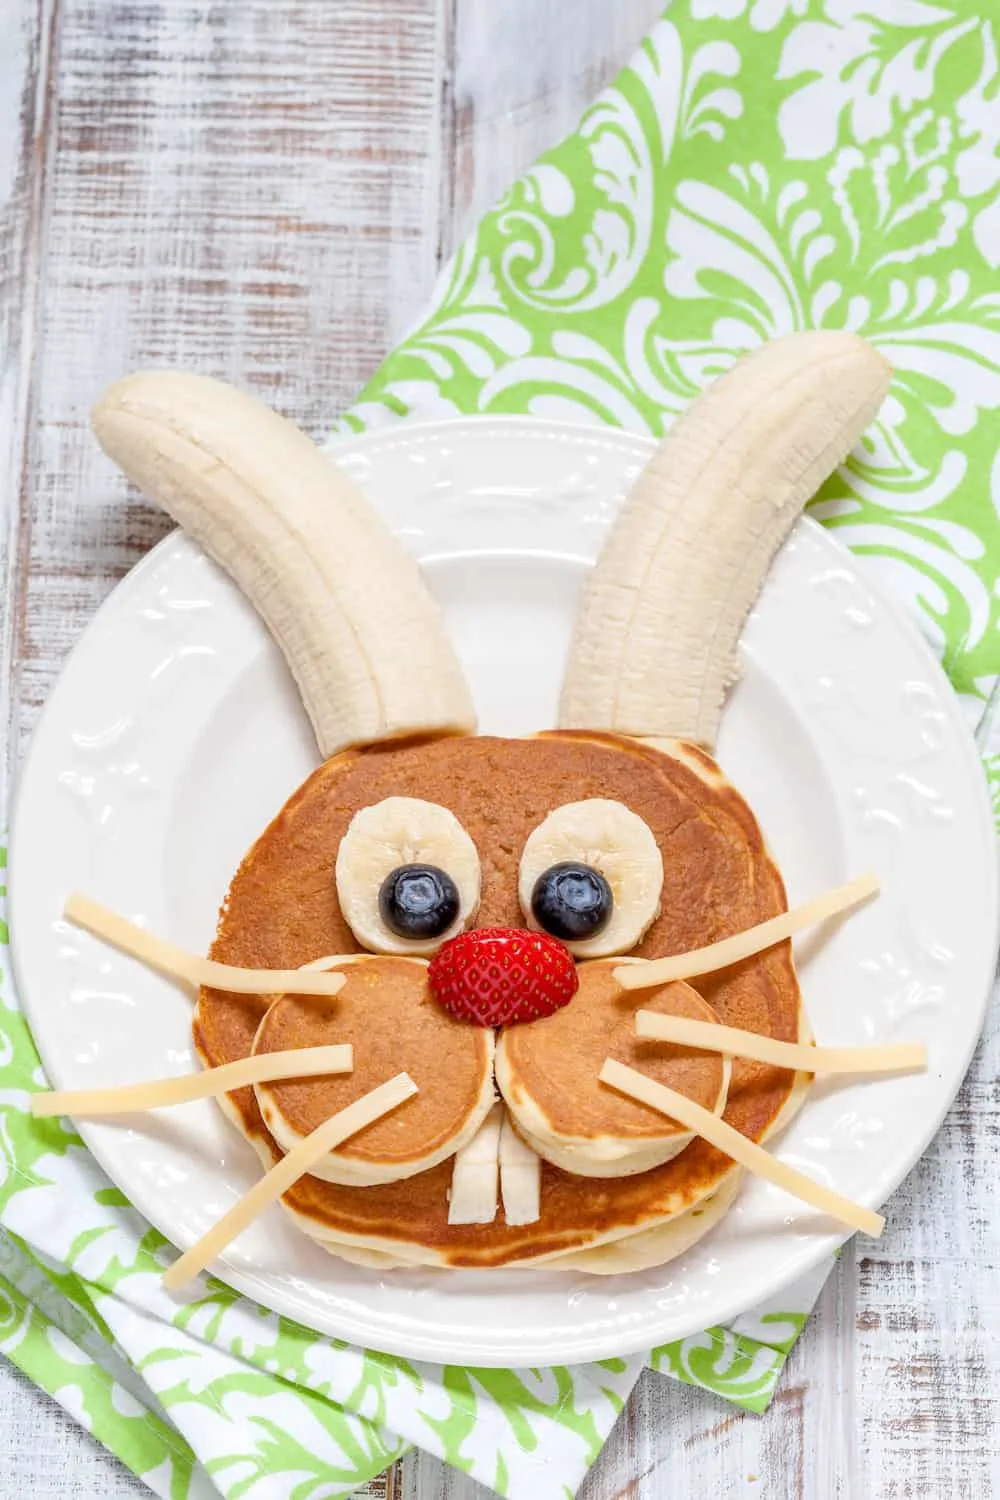 Easter breakfast ideas - Easter bunny pancakes